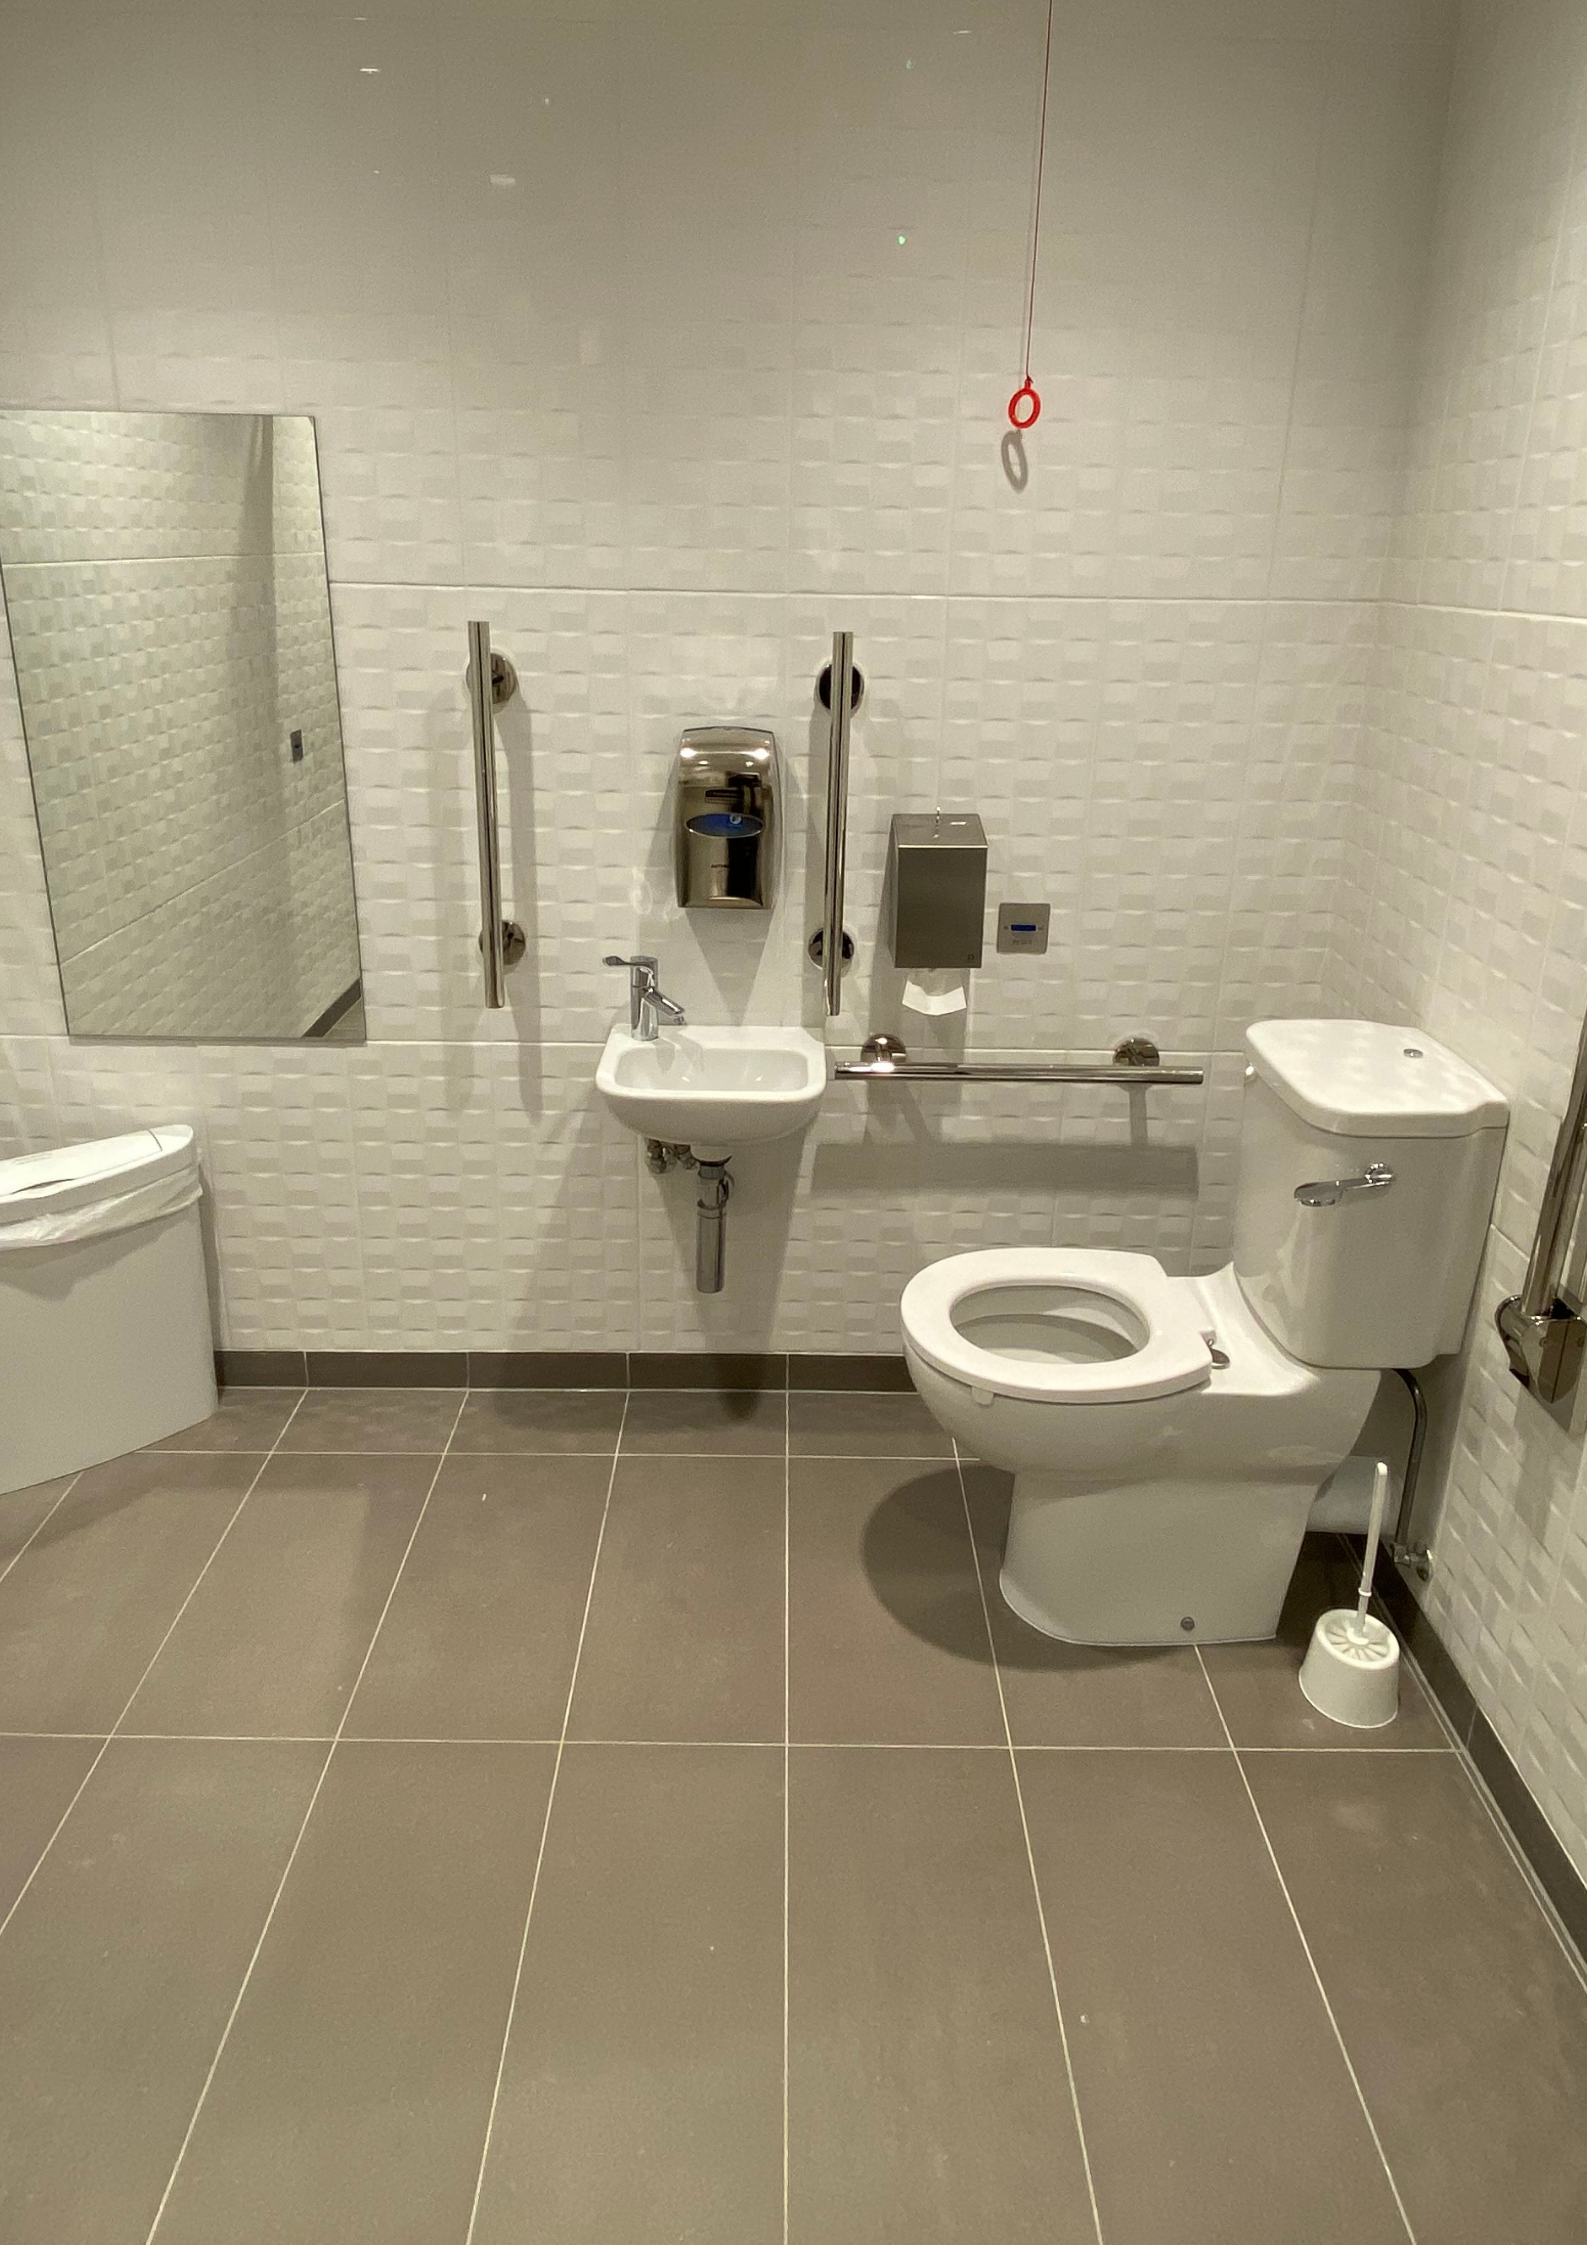 washroom pic 1.png